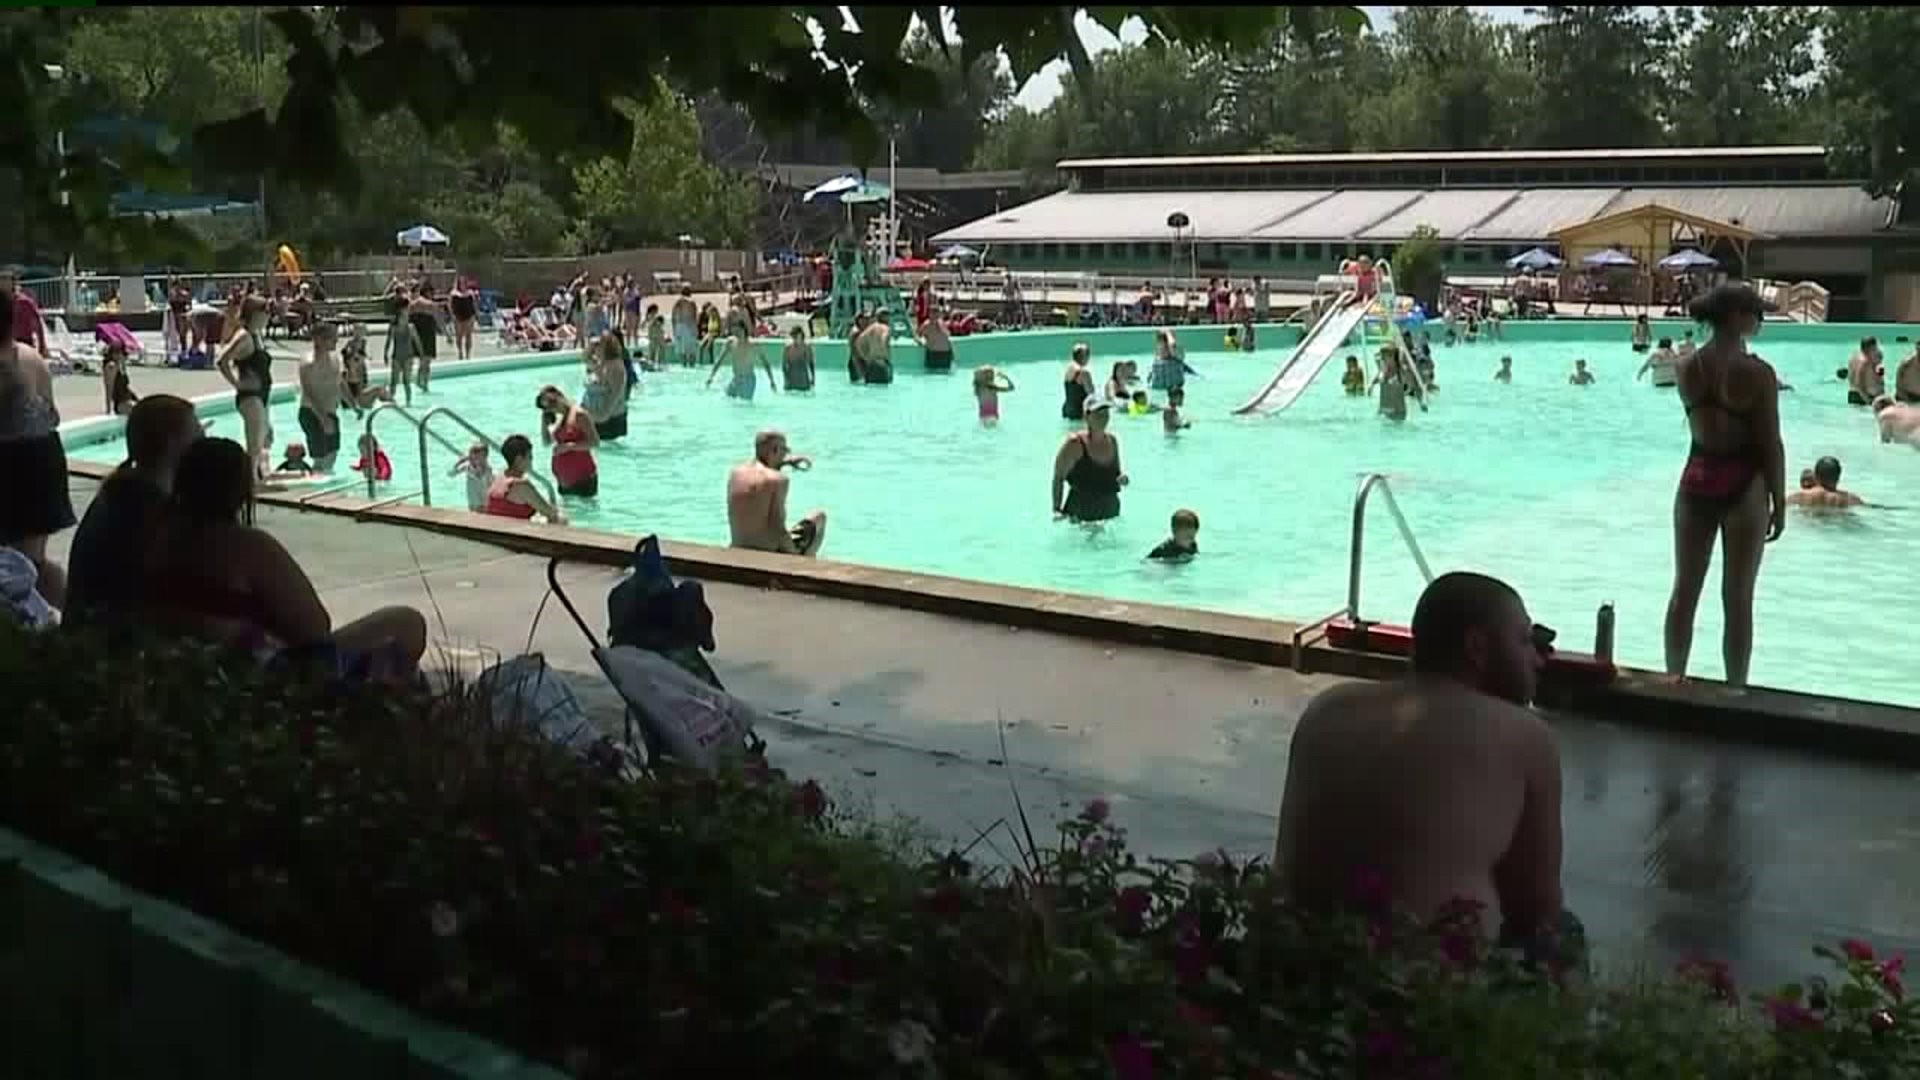 Pool at Knoebels Reopens after Flood